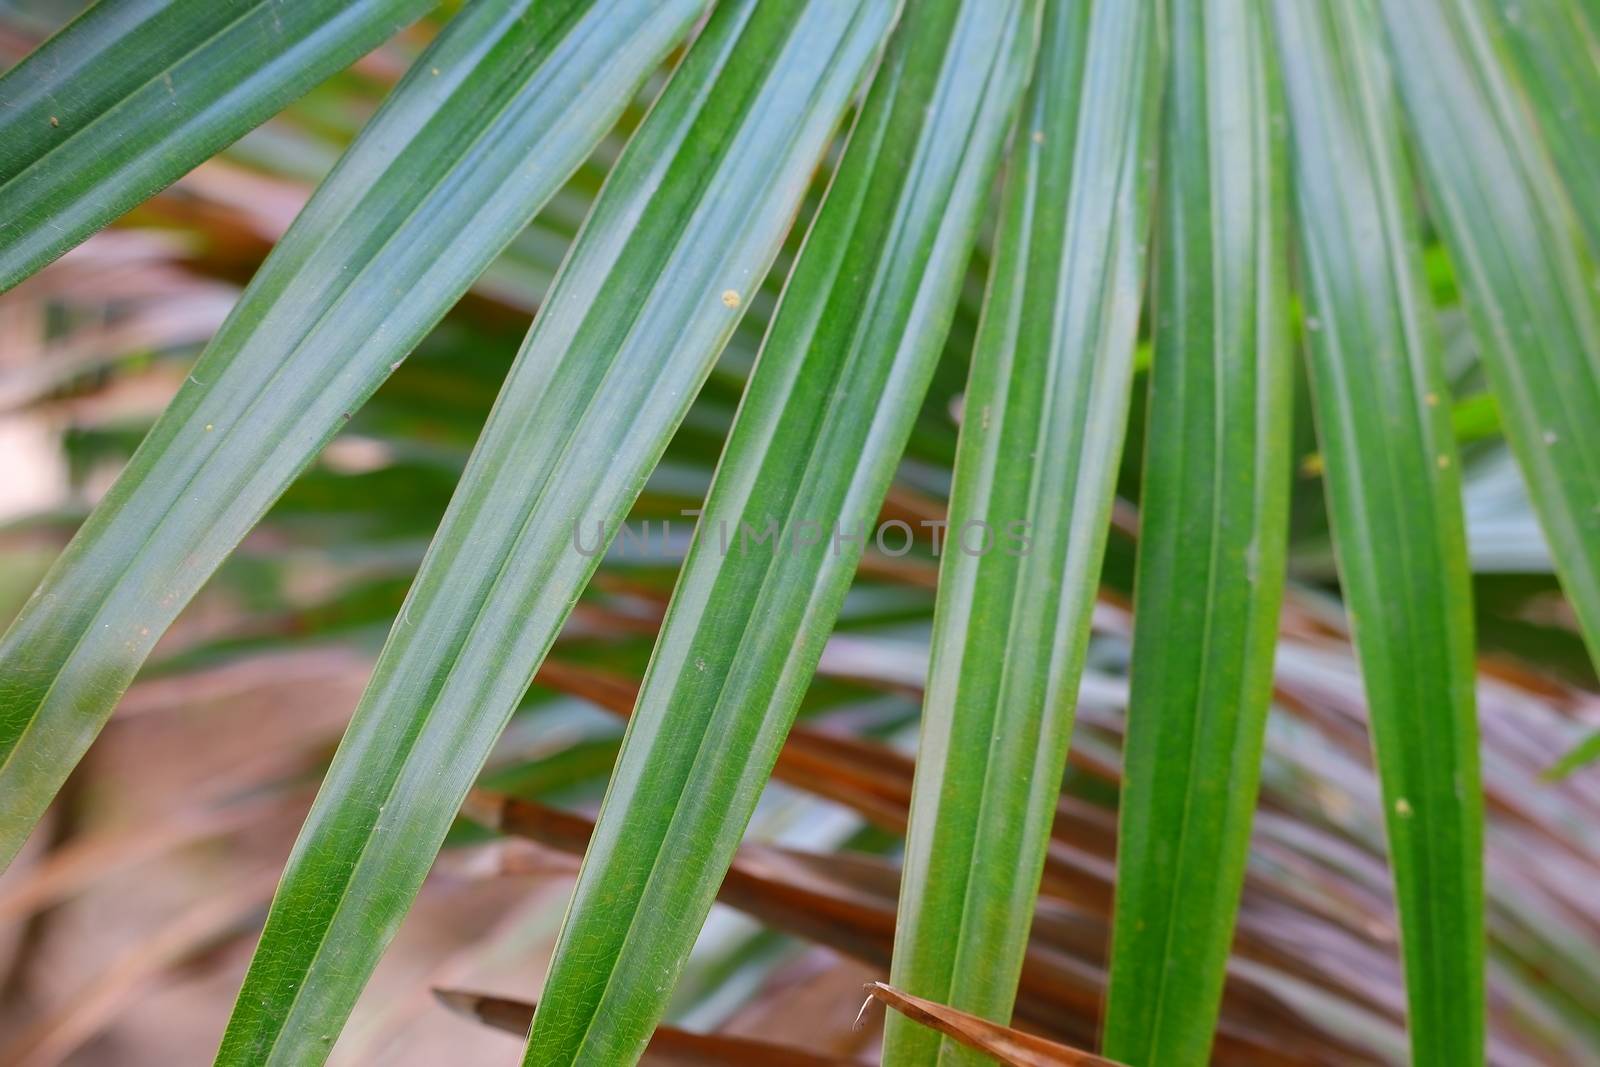 blurred leaf of palm tree background